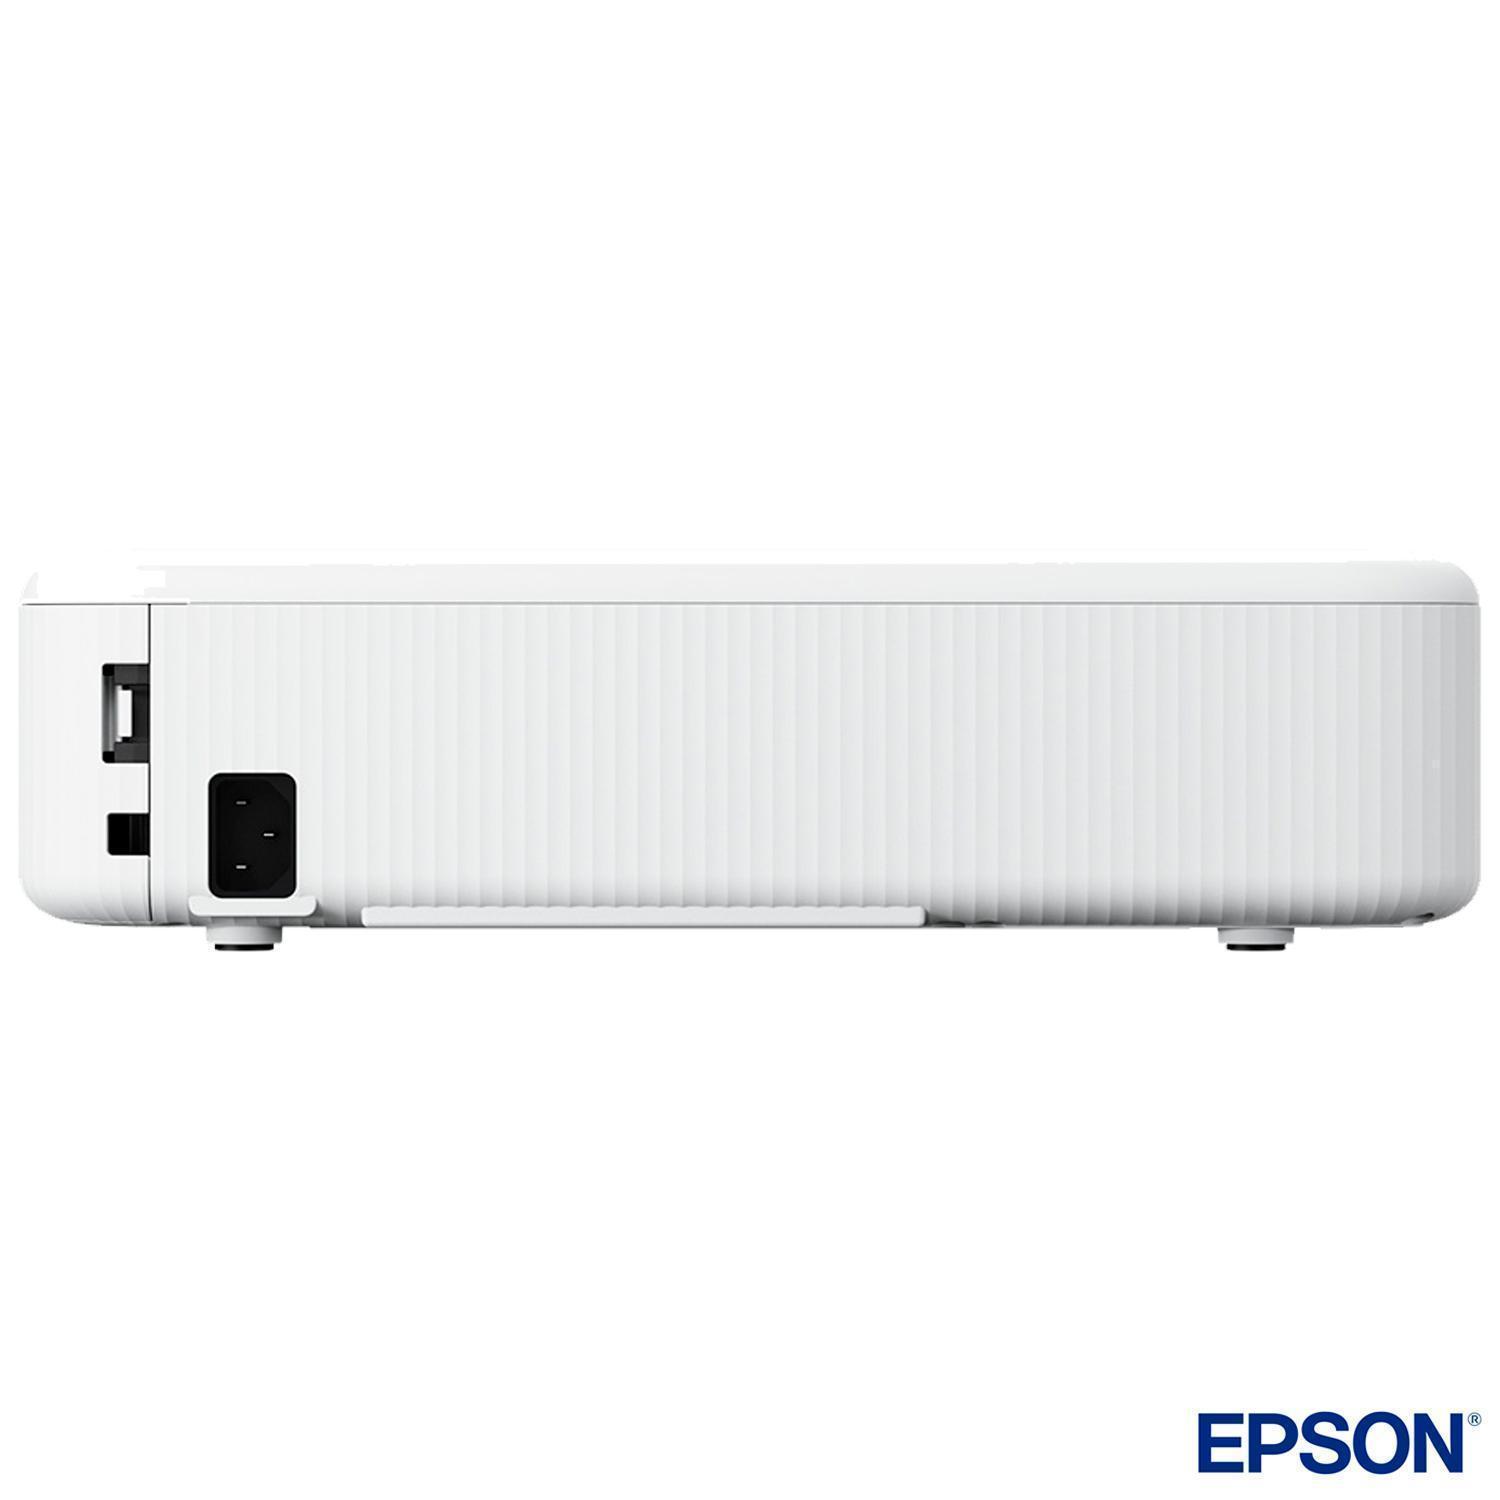 Projetor Epson EpiqVision FH-02 Full HD com USB e HDMI - V11HA85020